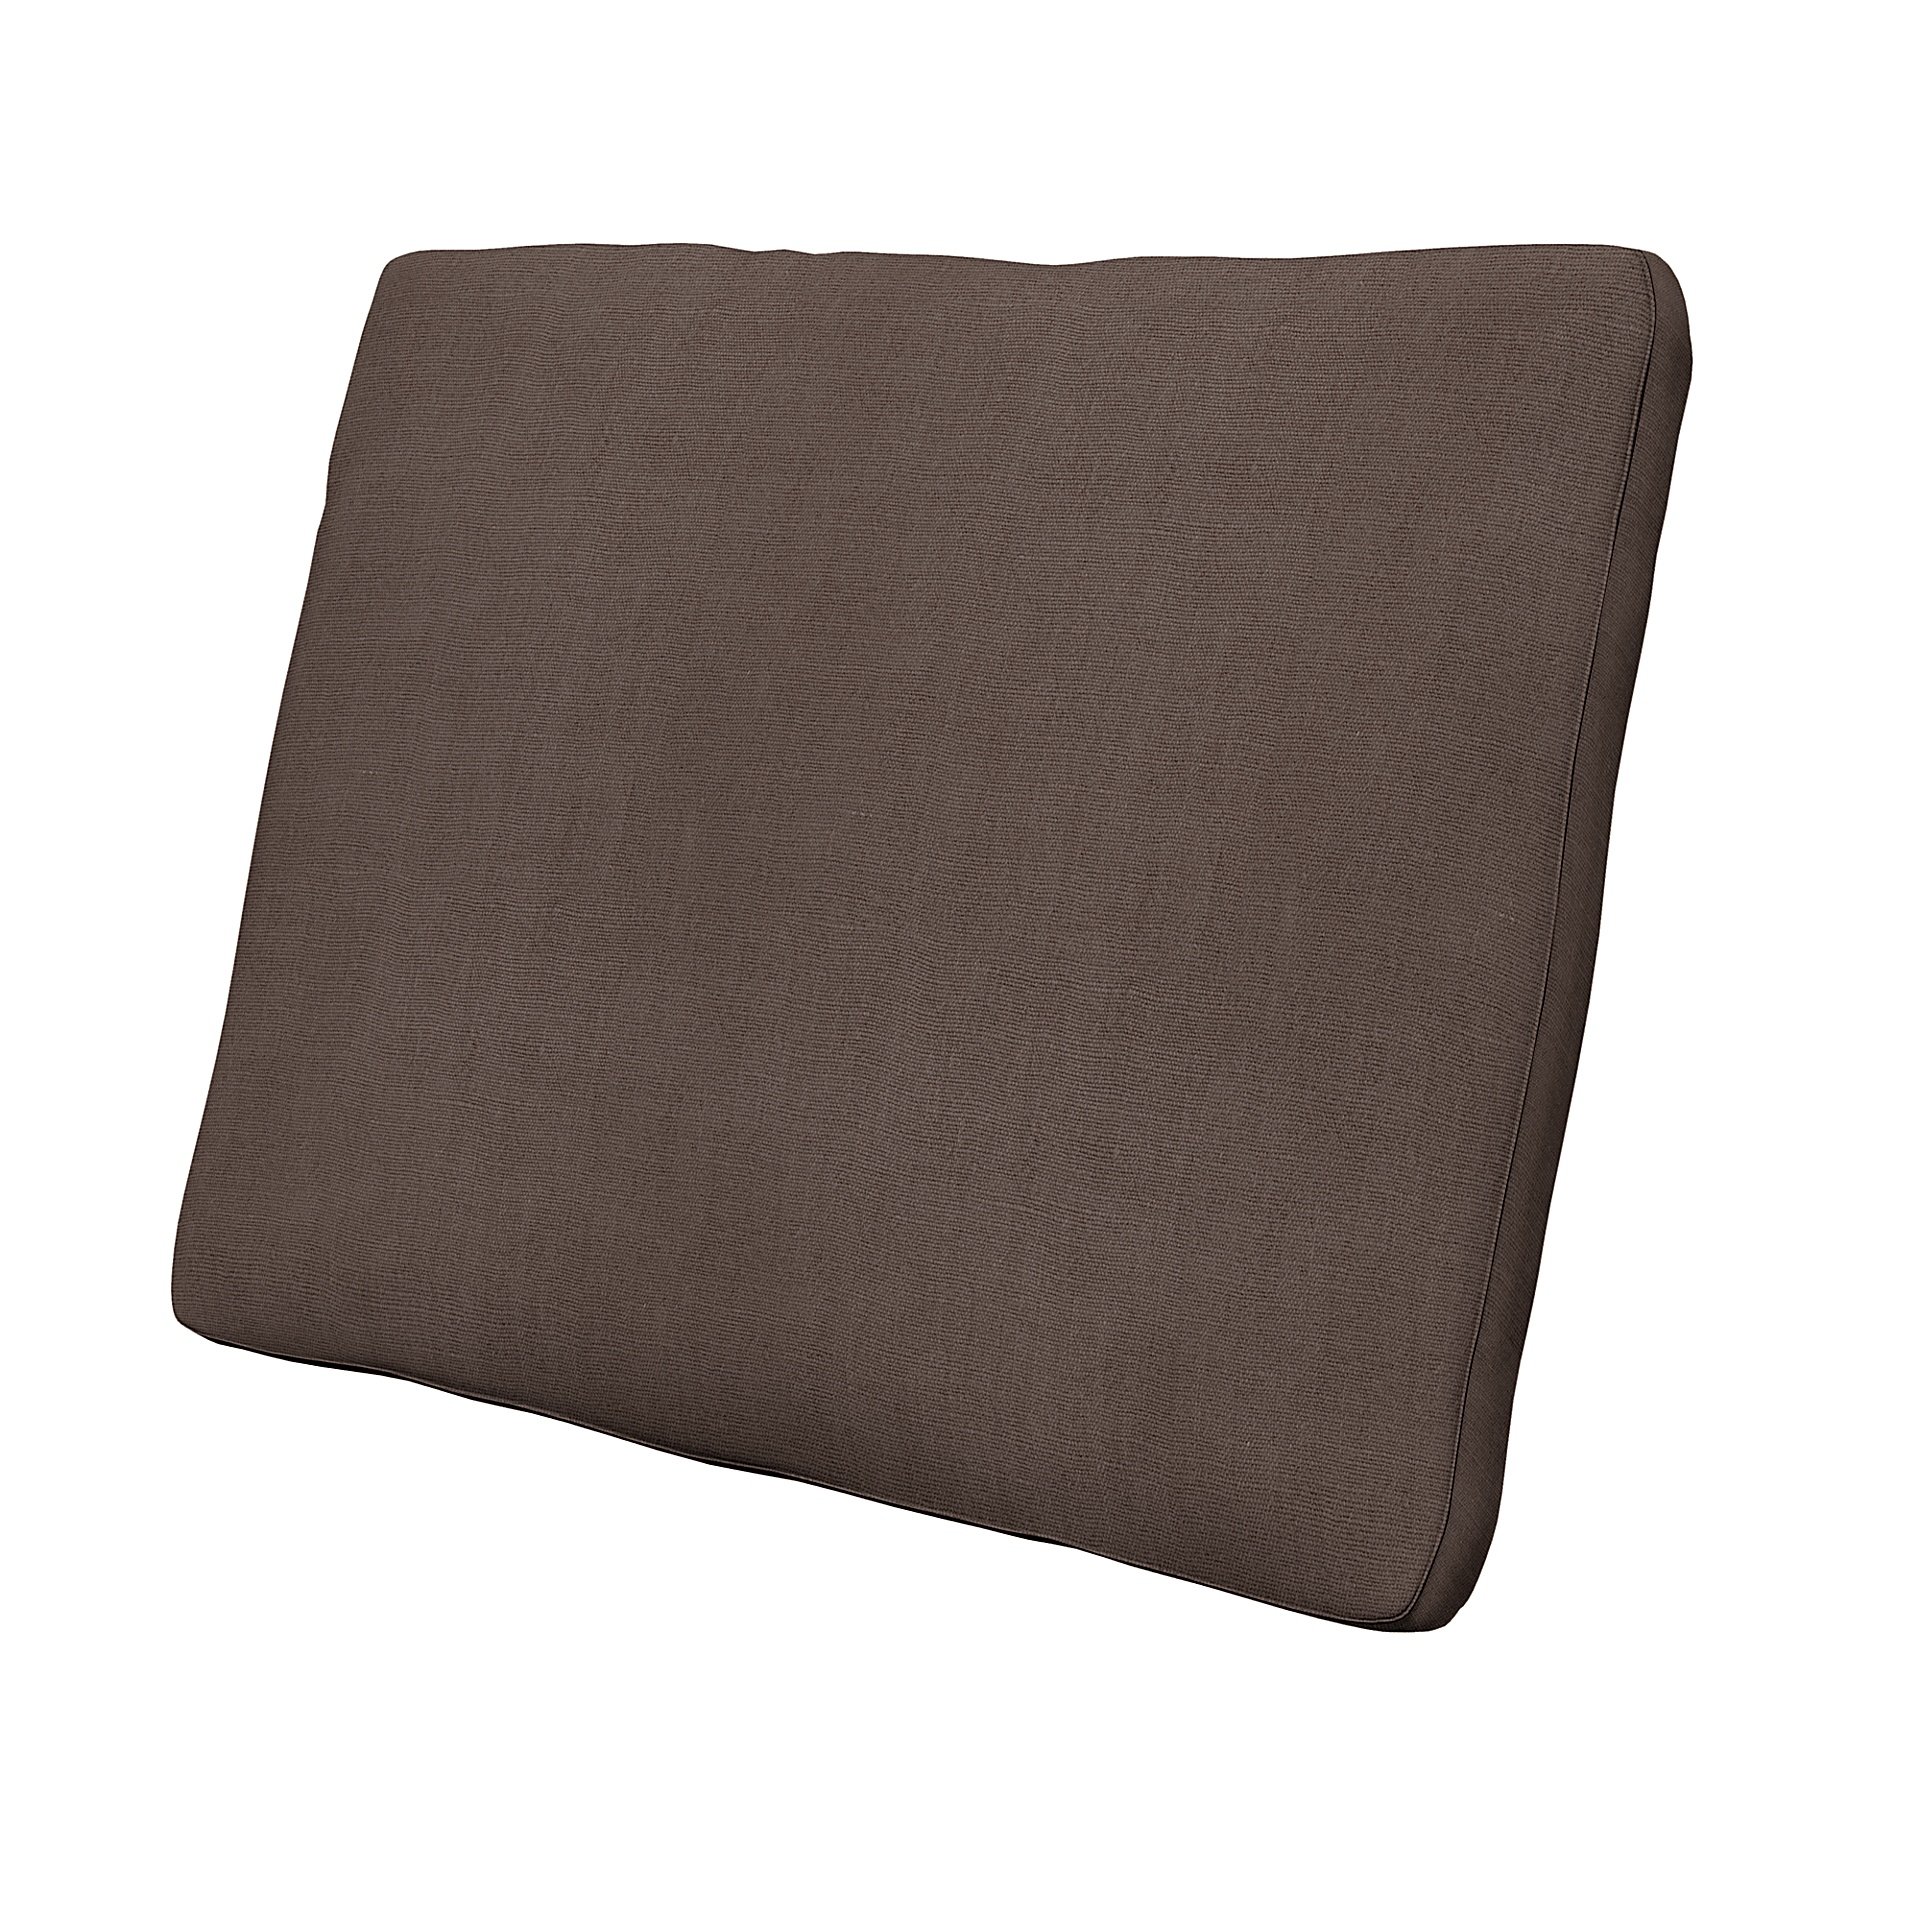 IKEA - Cushion Cover Karlstad 58x48x5 cm, Cocoa, Linen - Bemz